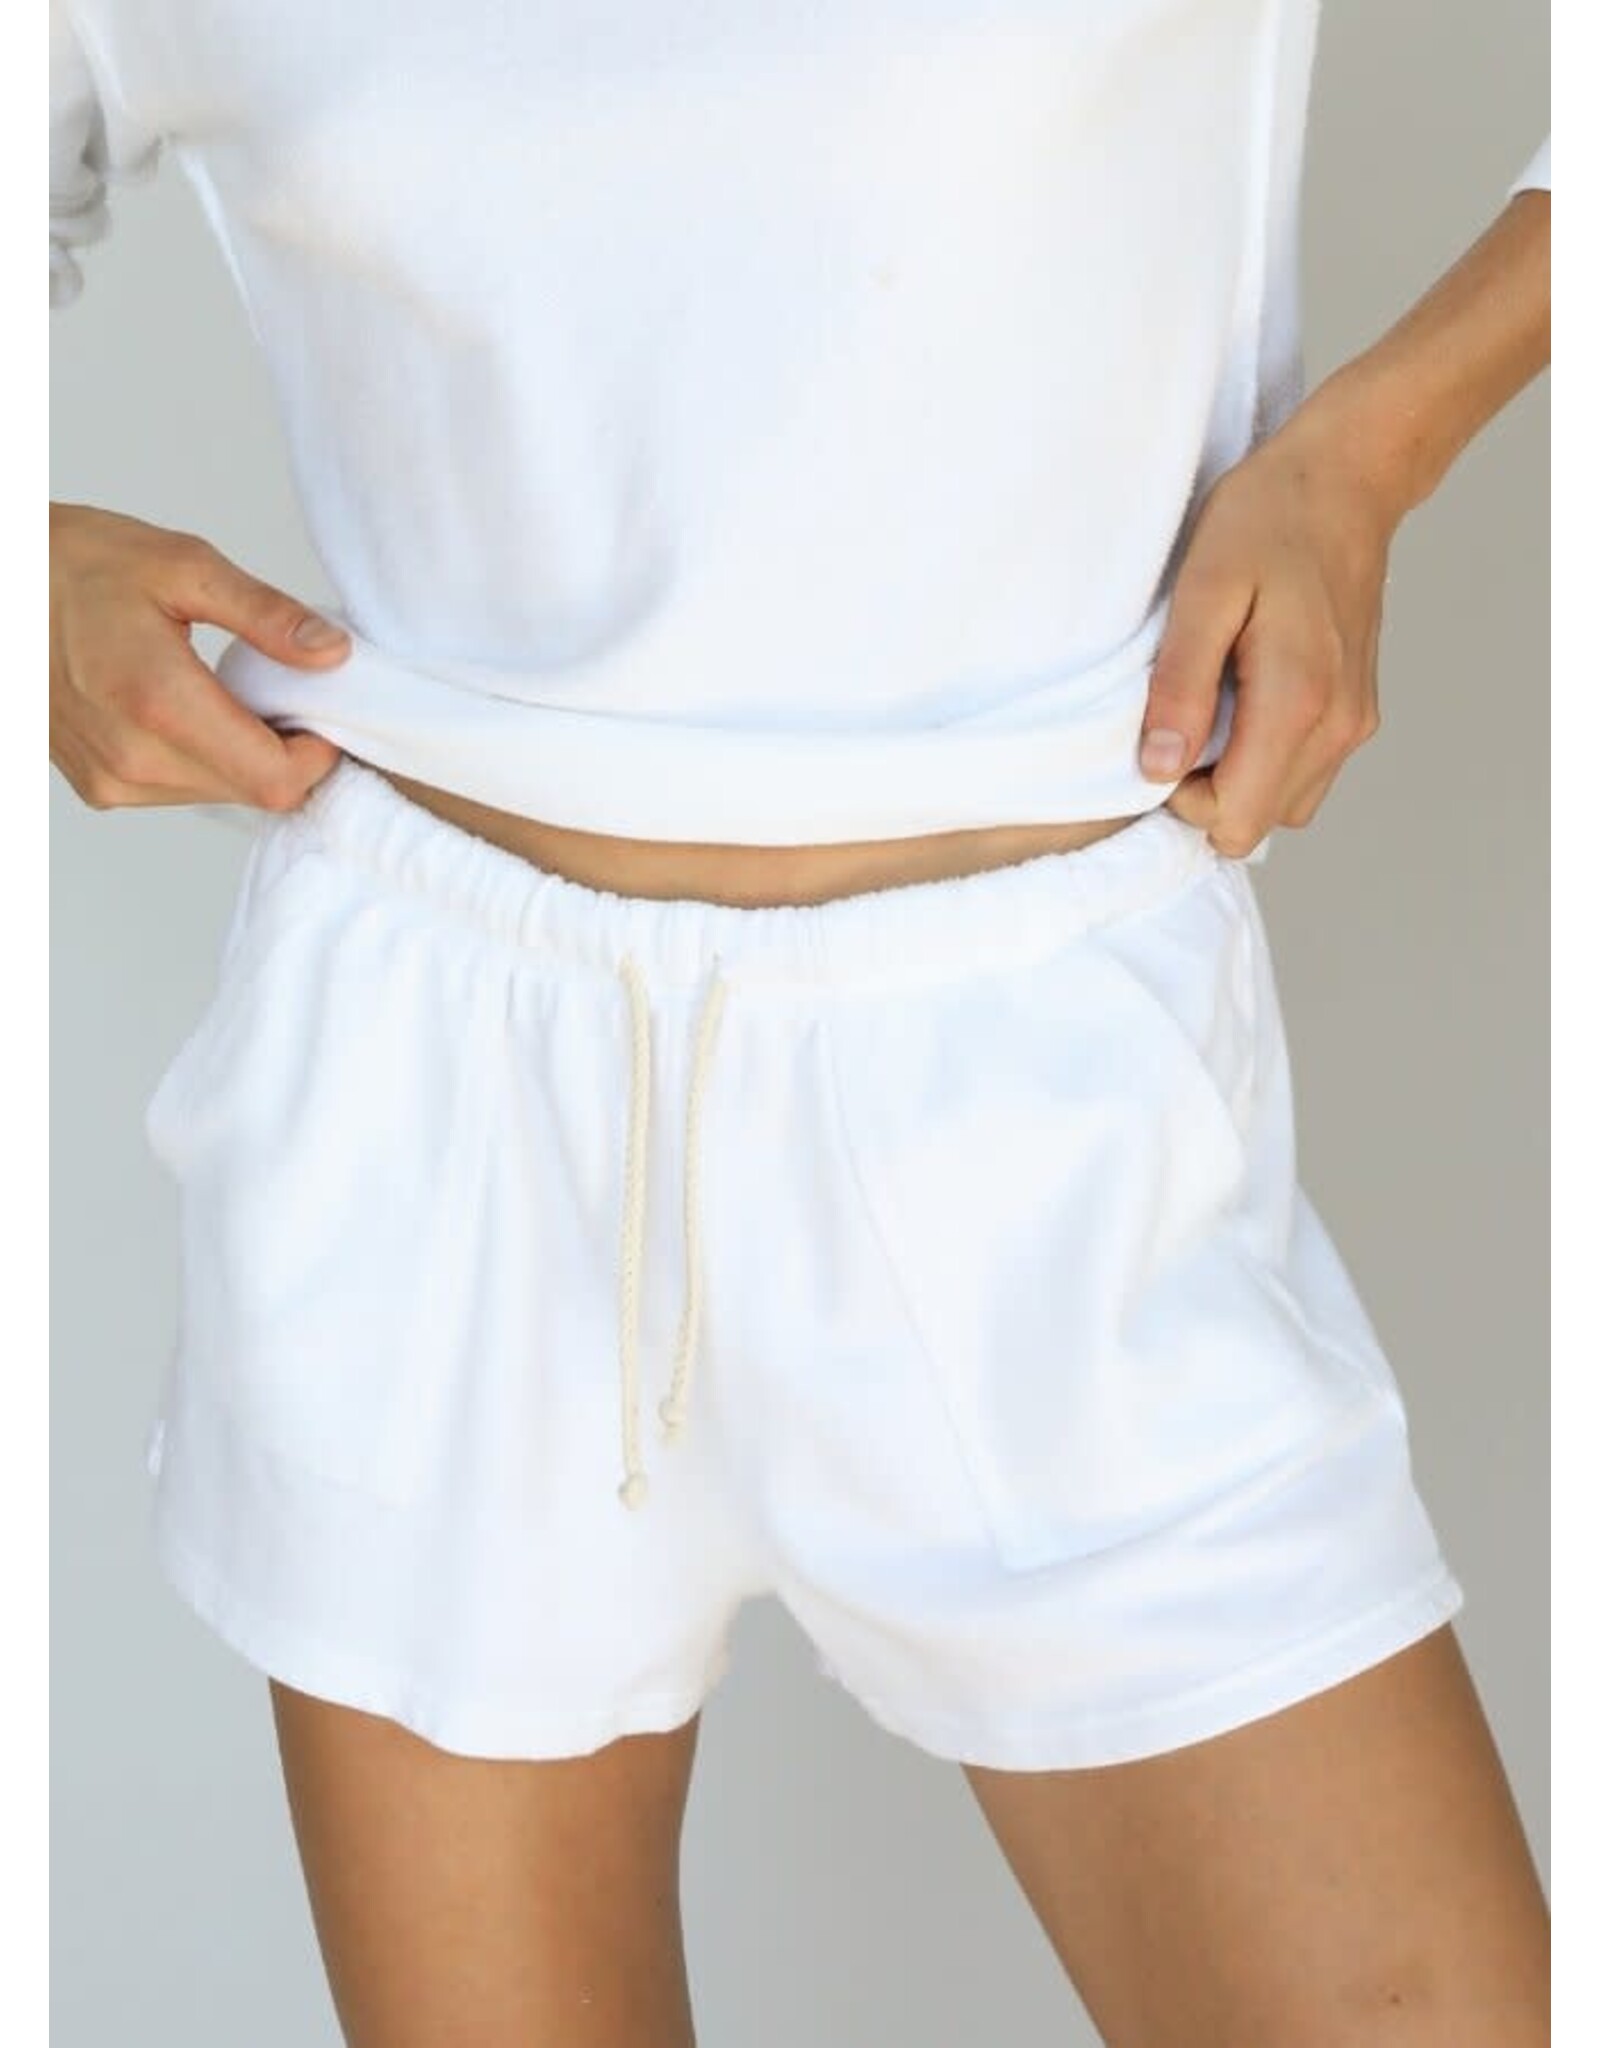 PeRFECT WHITE TEE PWT Lou Shorts